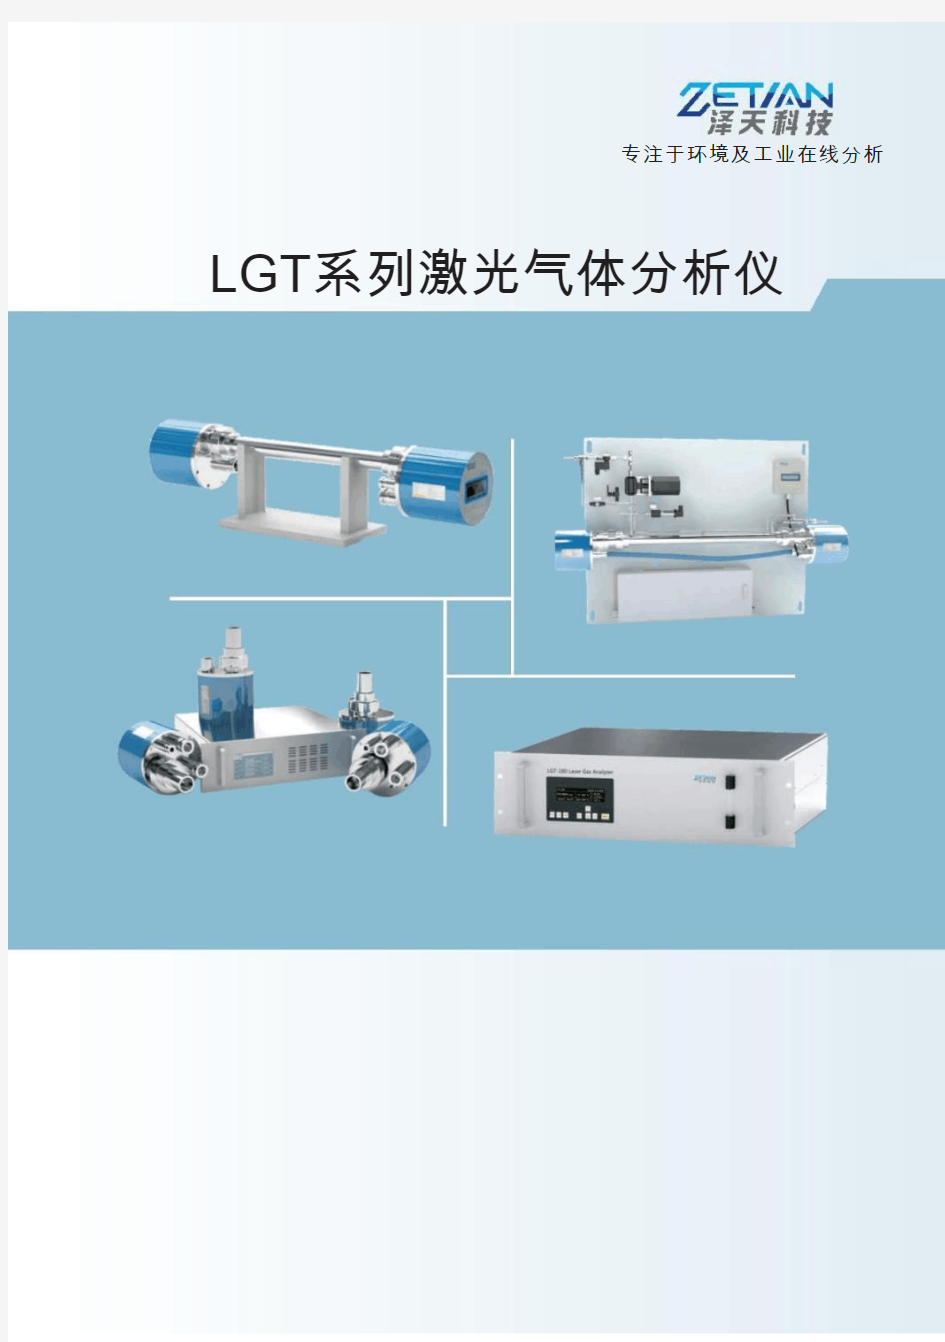 LGT系列激光气体分析仪zetian